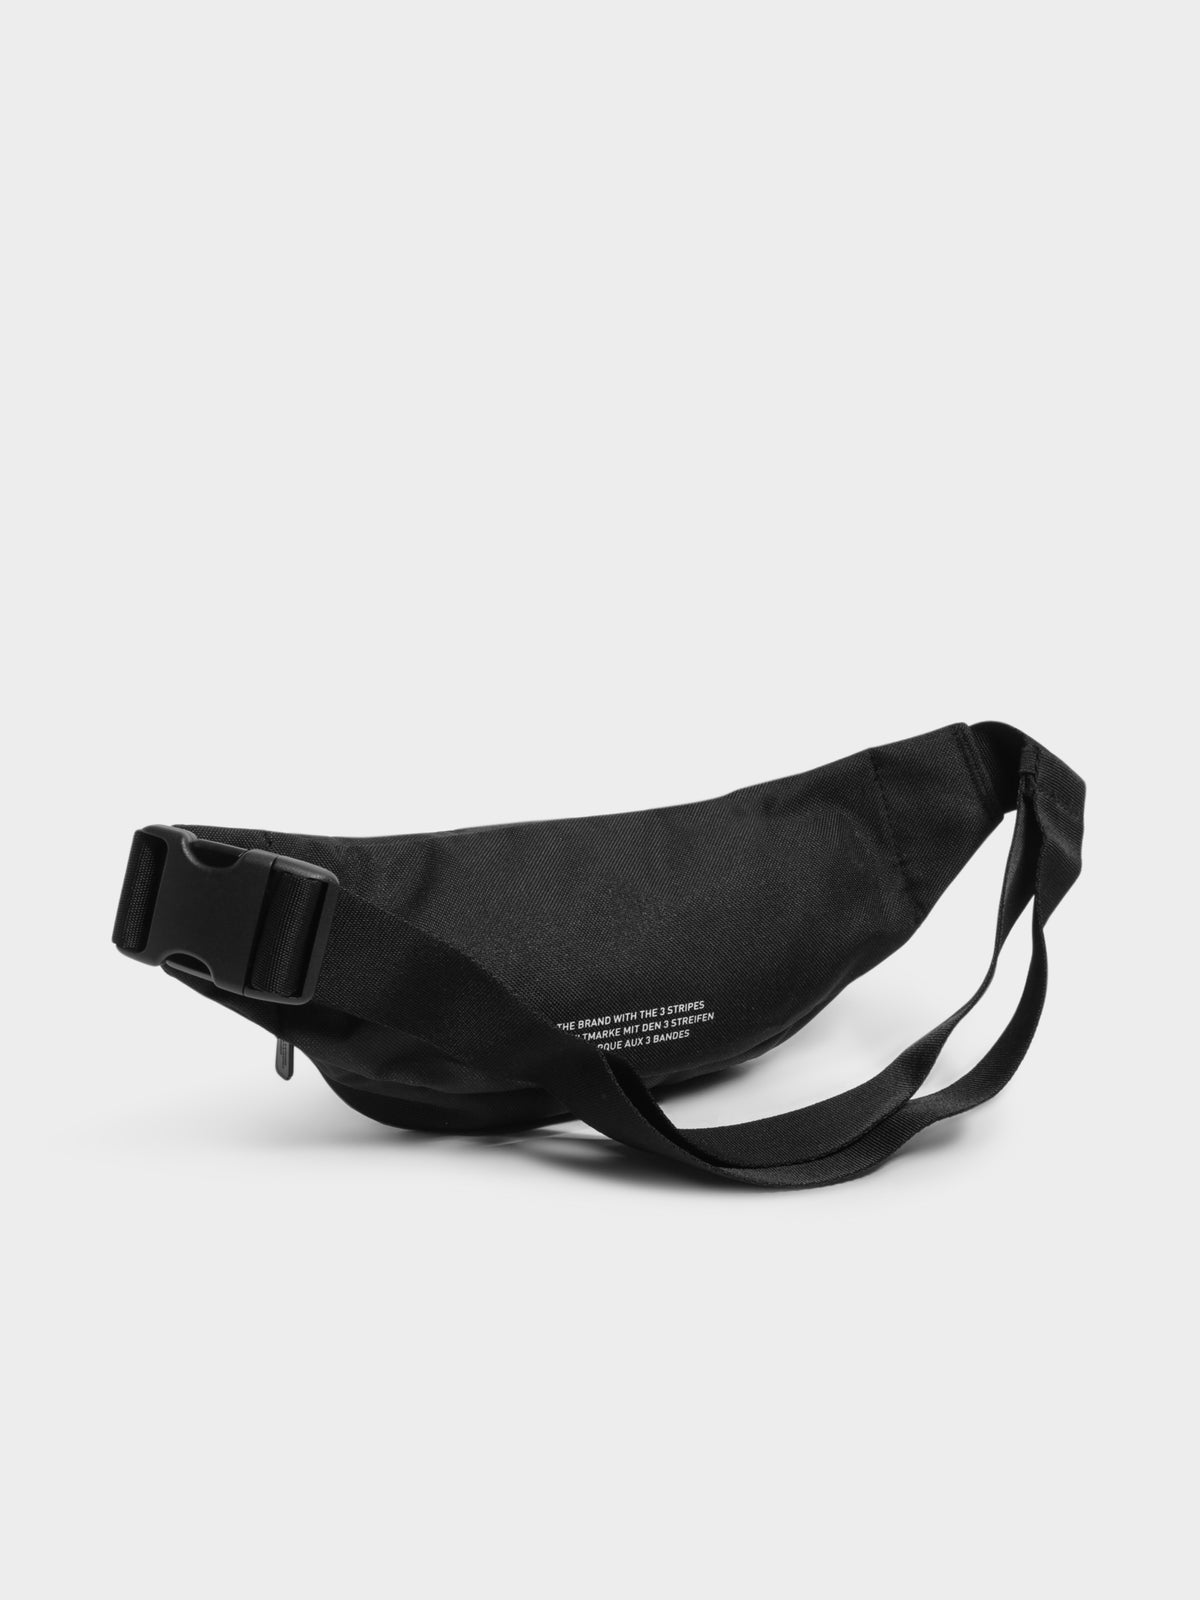 Essential Crossbody Bag in Black